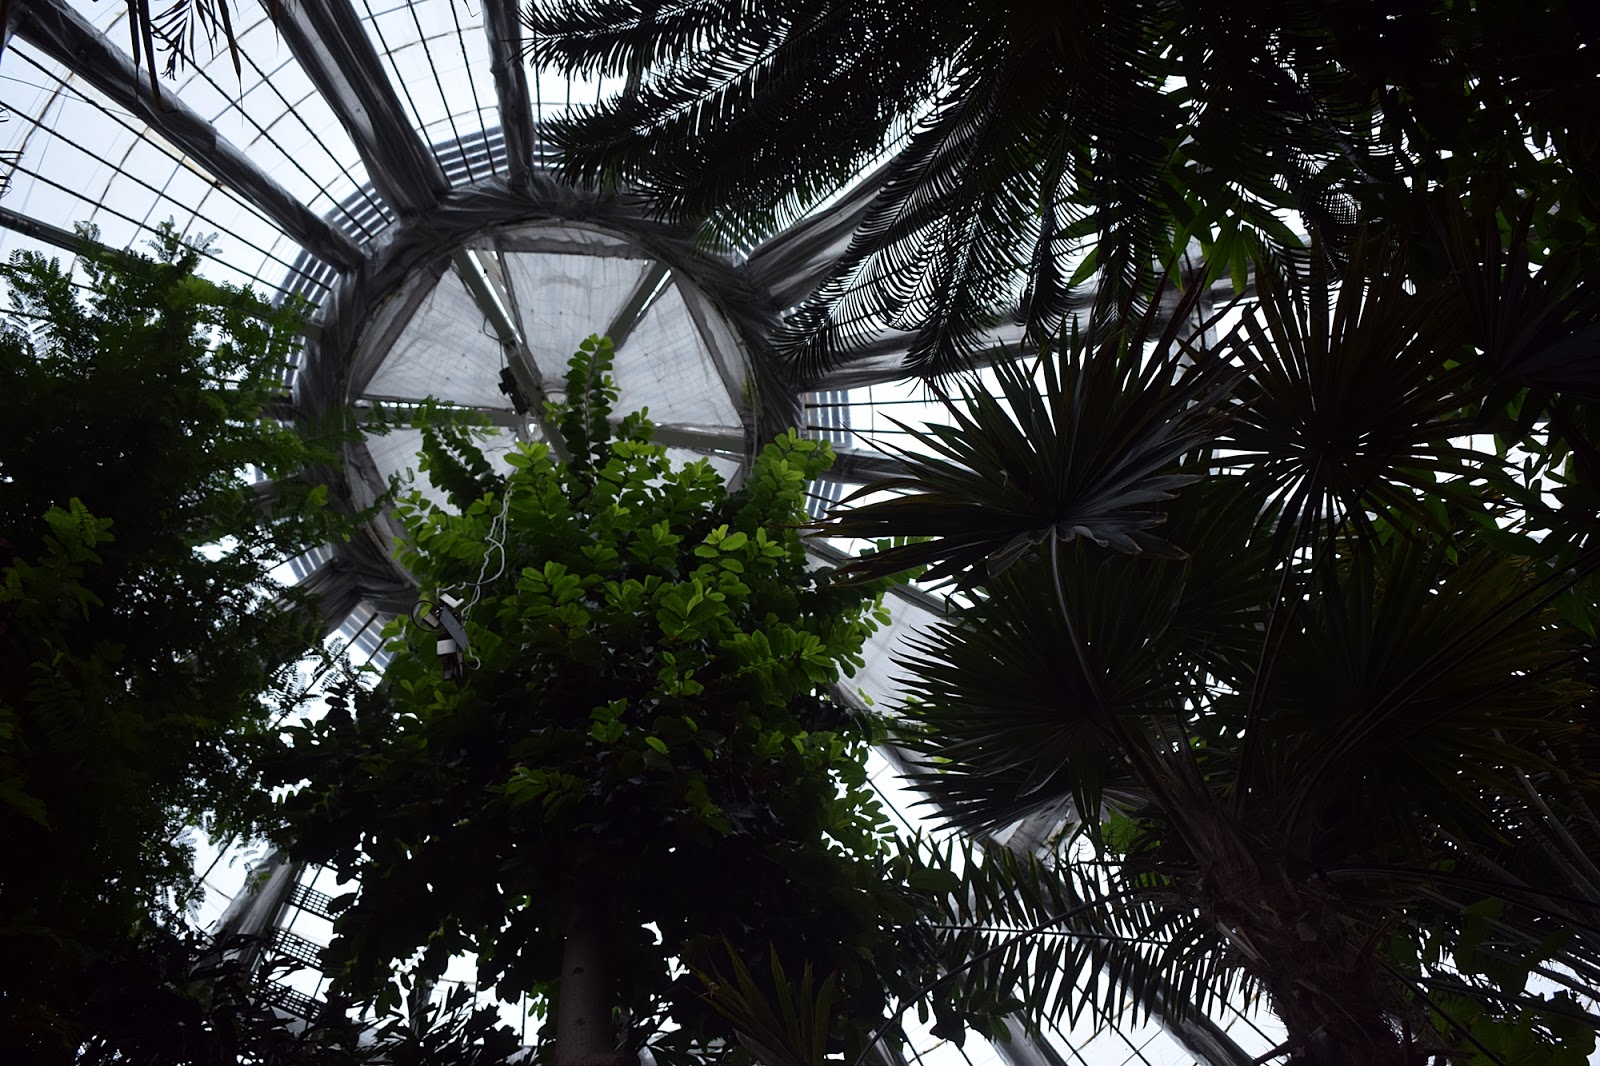 University of Copenhagen, Botanical Garden (palmhouse)